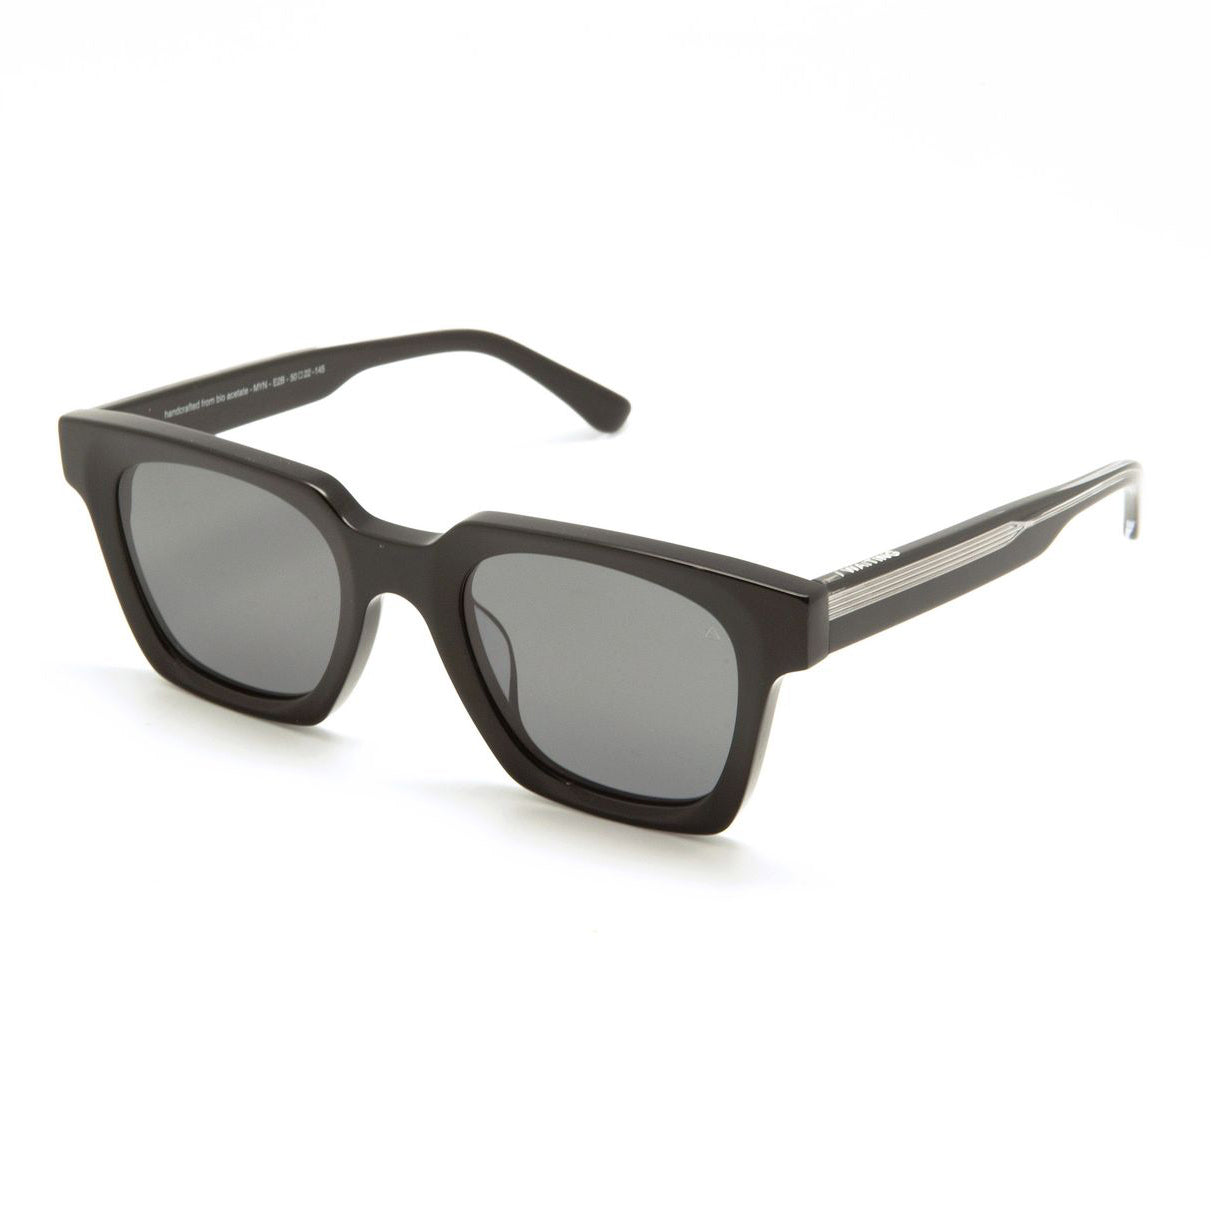 Myn E2B Sunglasses - Black & Black Pola Lens